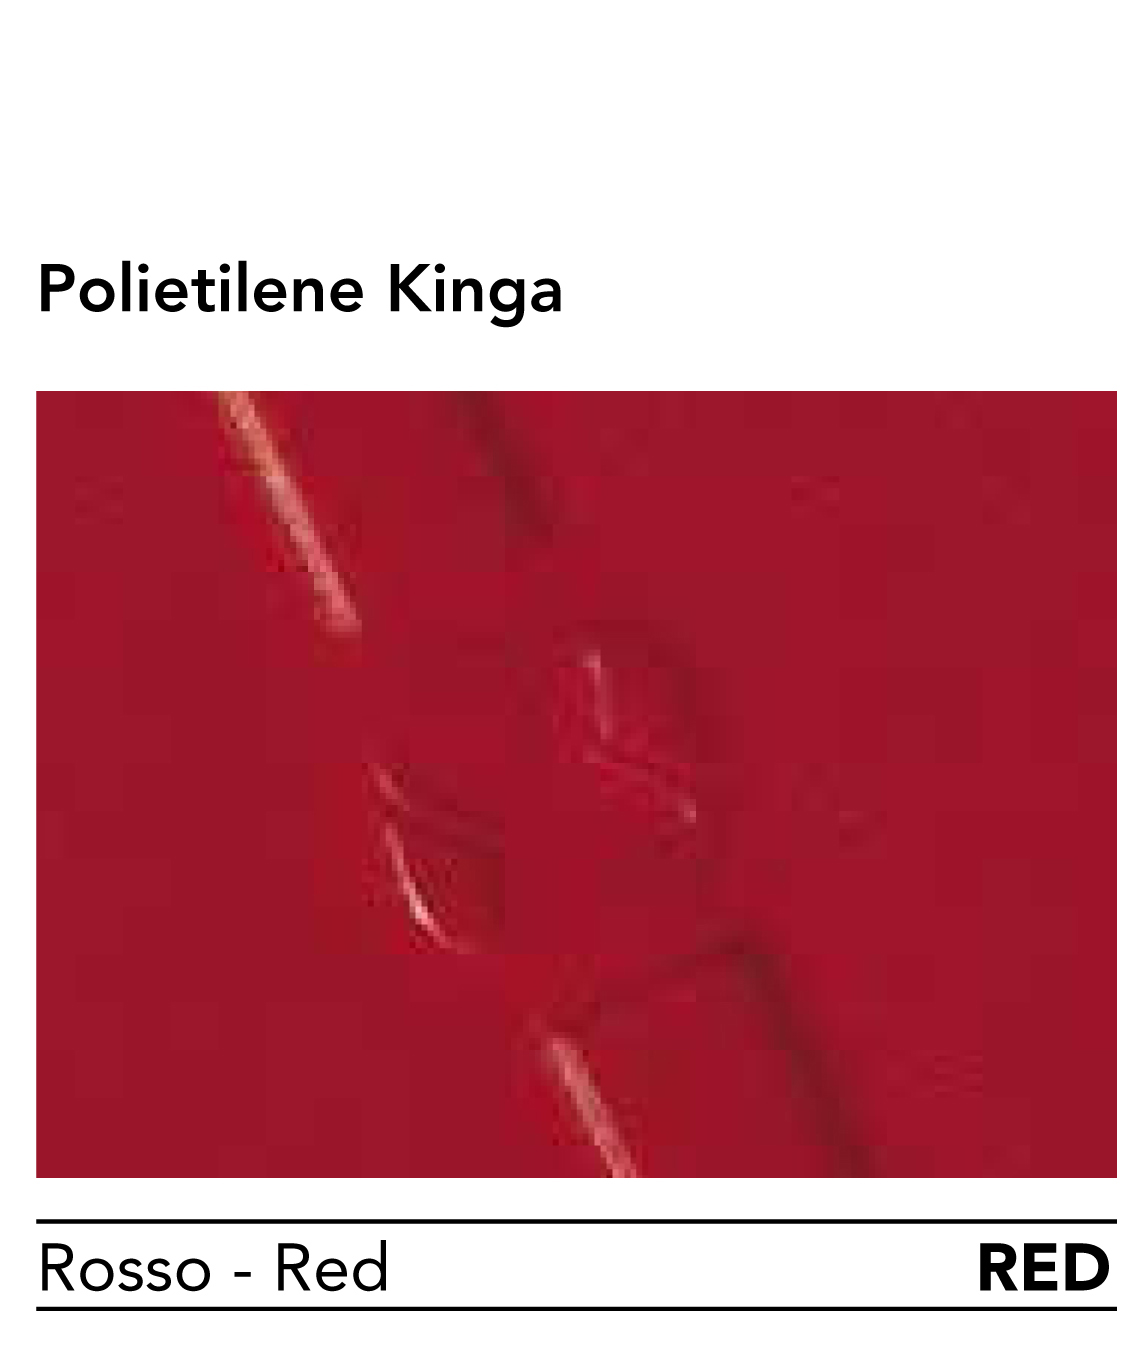 Polietilene Kinga – RED Rosso Red